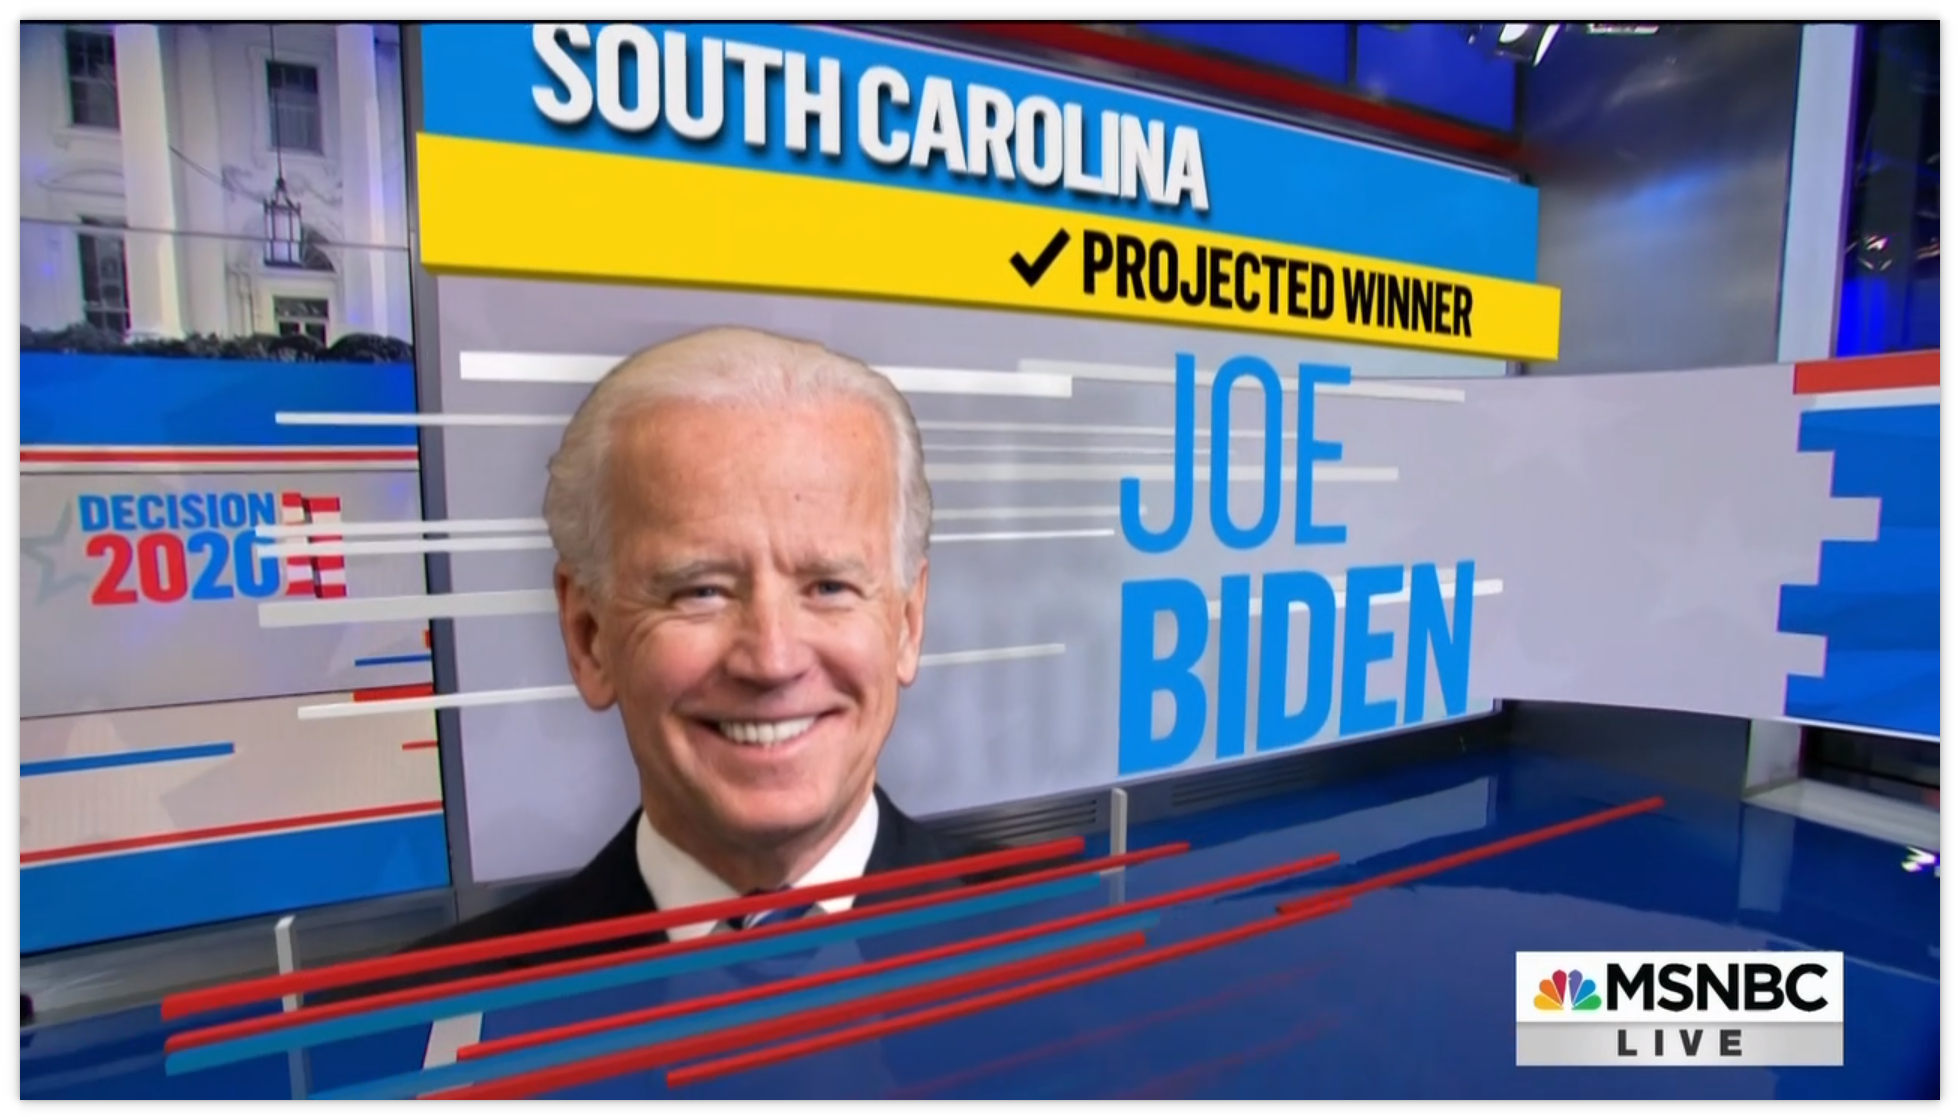 Joe Biden projected to win South Carolina